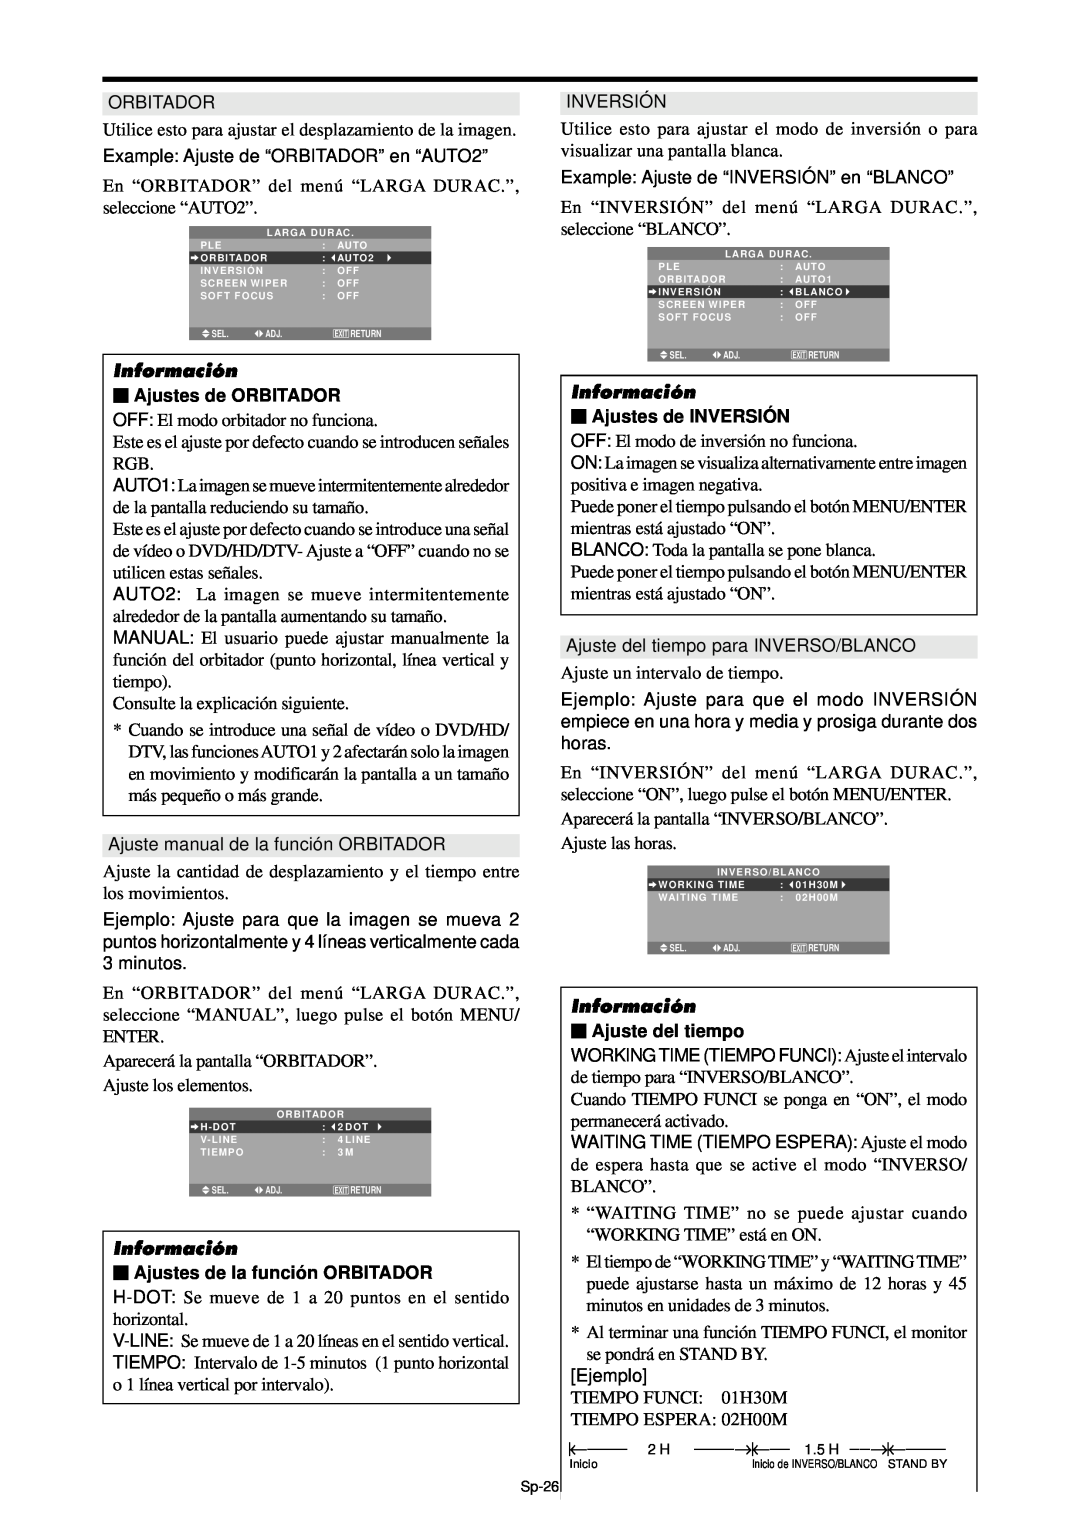 NEC PX-61XM4A, PX-42XM4A manual Información, Ajustes de INVERSIÓ N, Ajustes de la funció n ORBITADOR, Ajuste del tiempo 